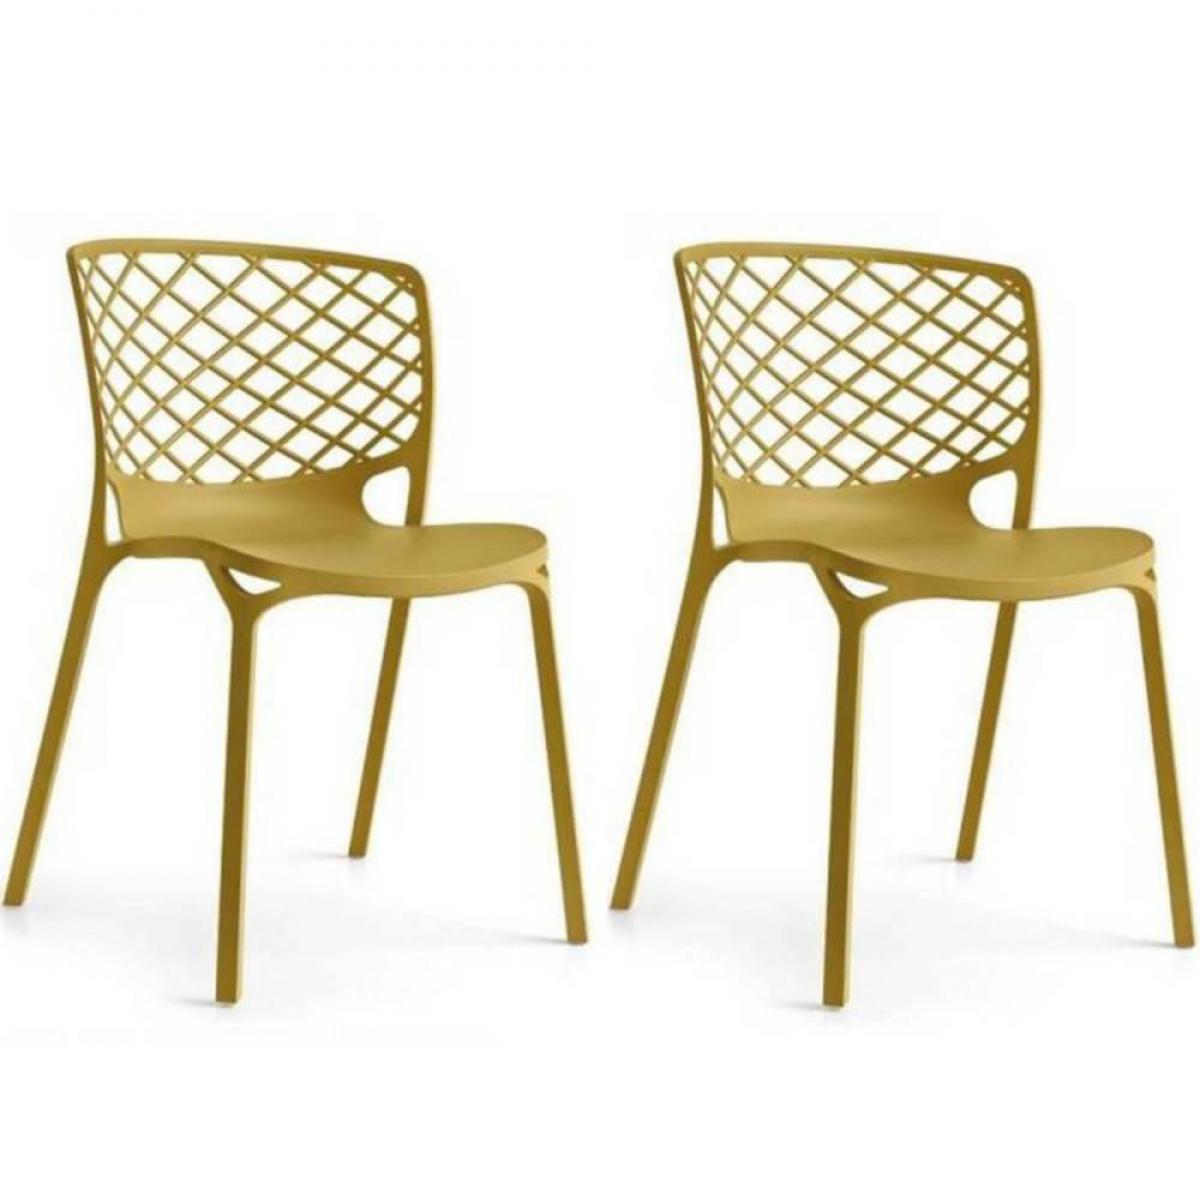 Inside 75 - Lot de 2 chaises empilable GAMERA jaune moutarde - Chaises